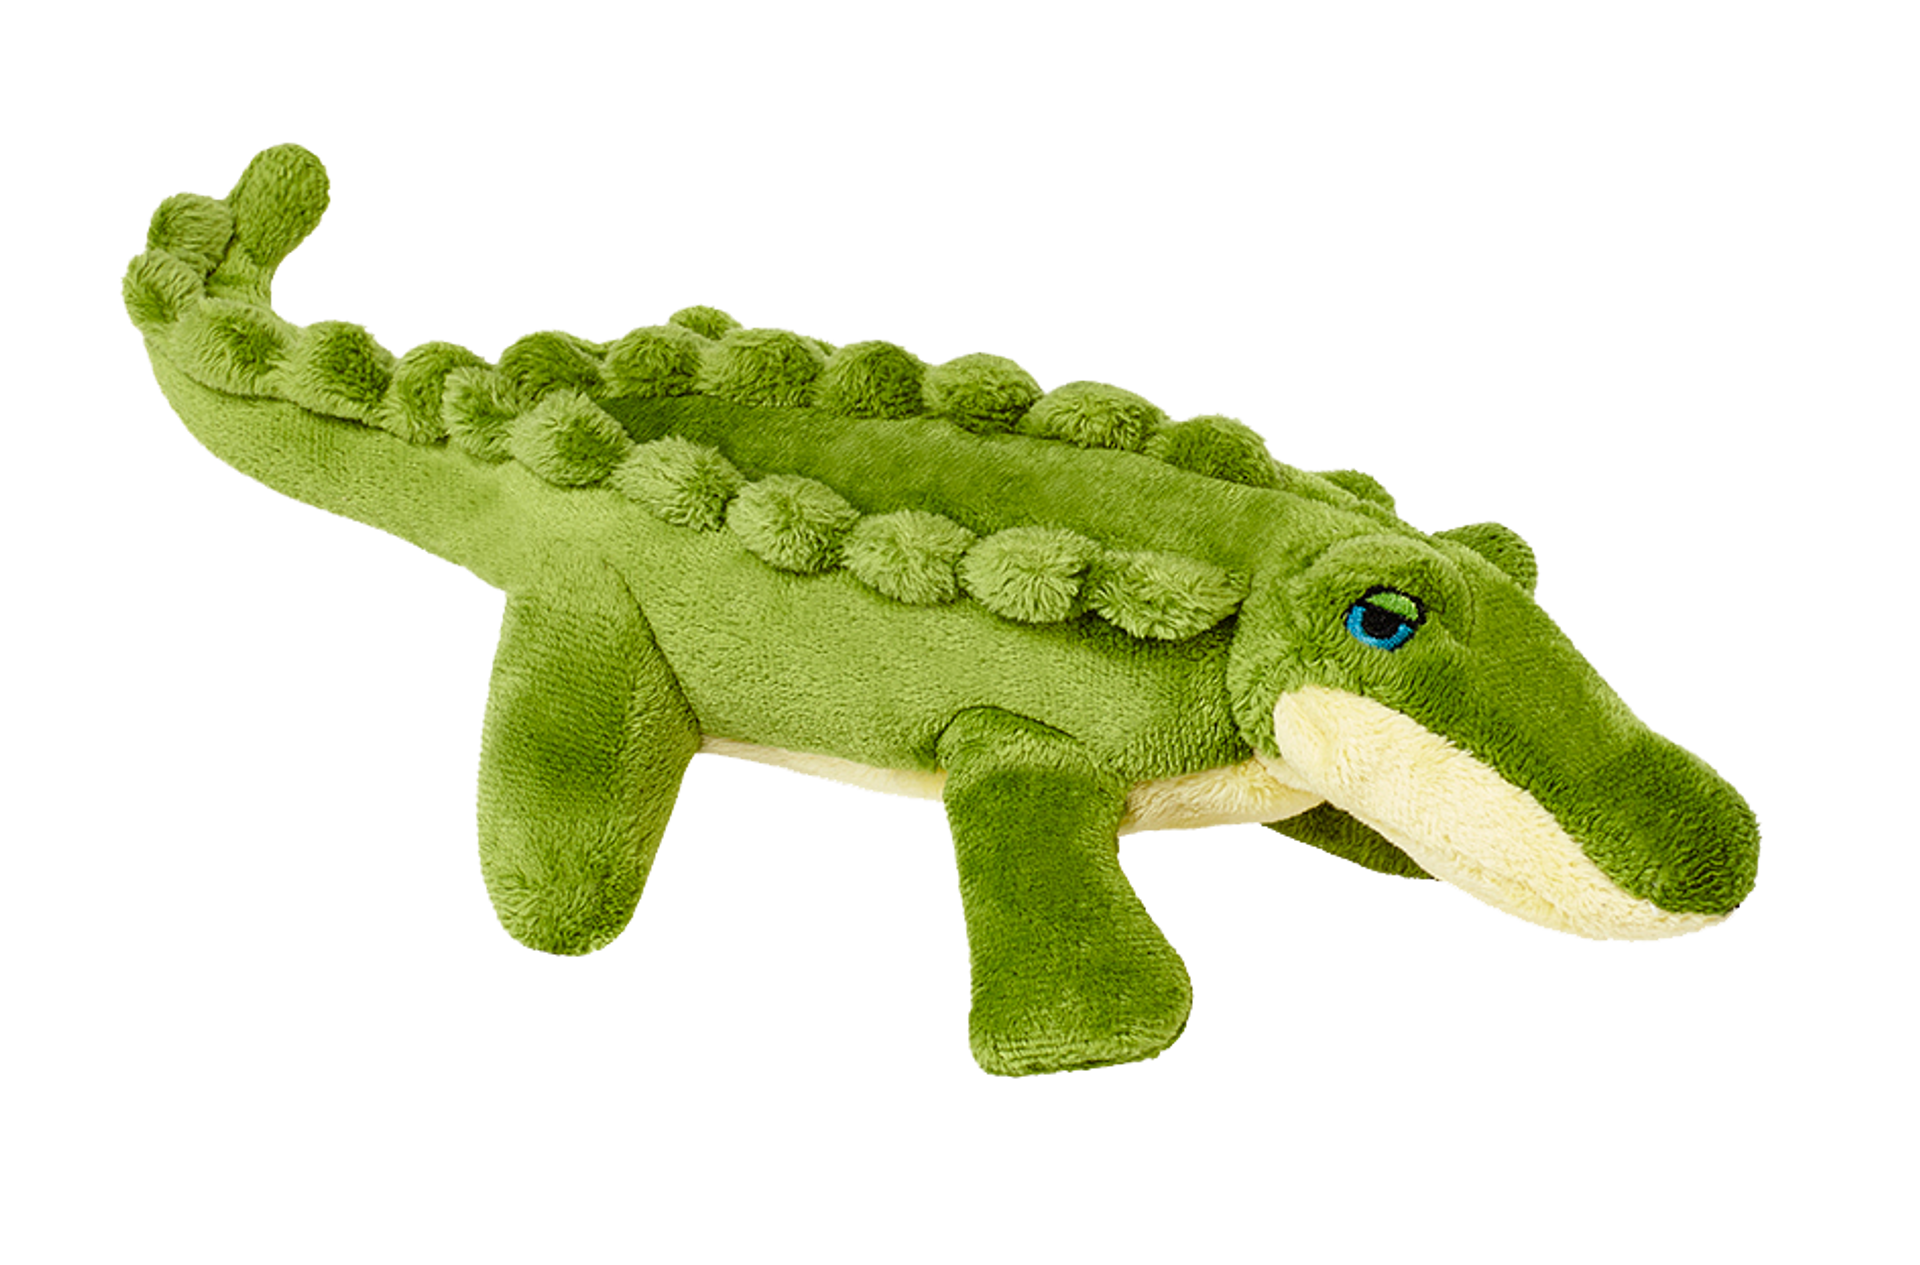 Savannah Baby Alligator Plush Toy for Dogs